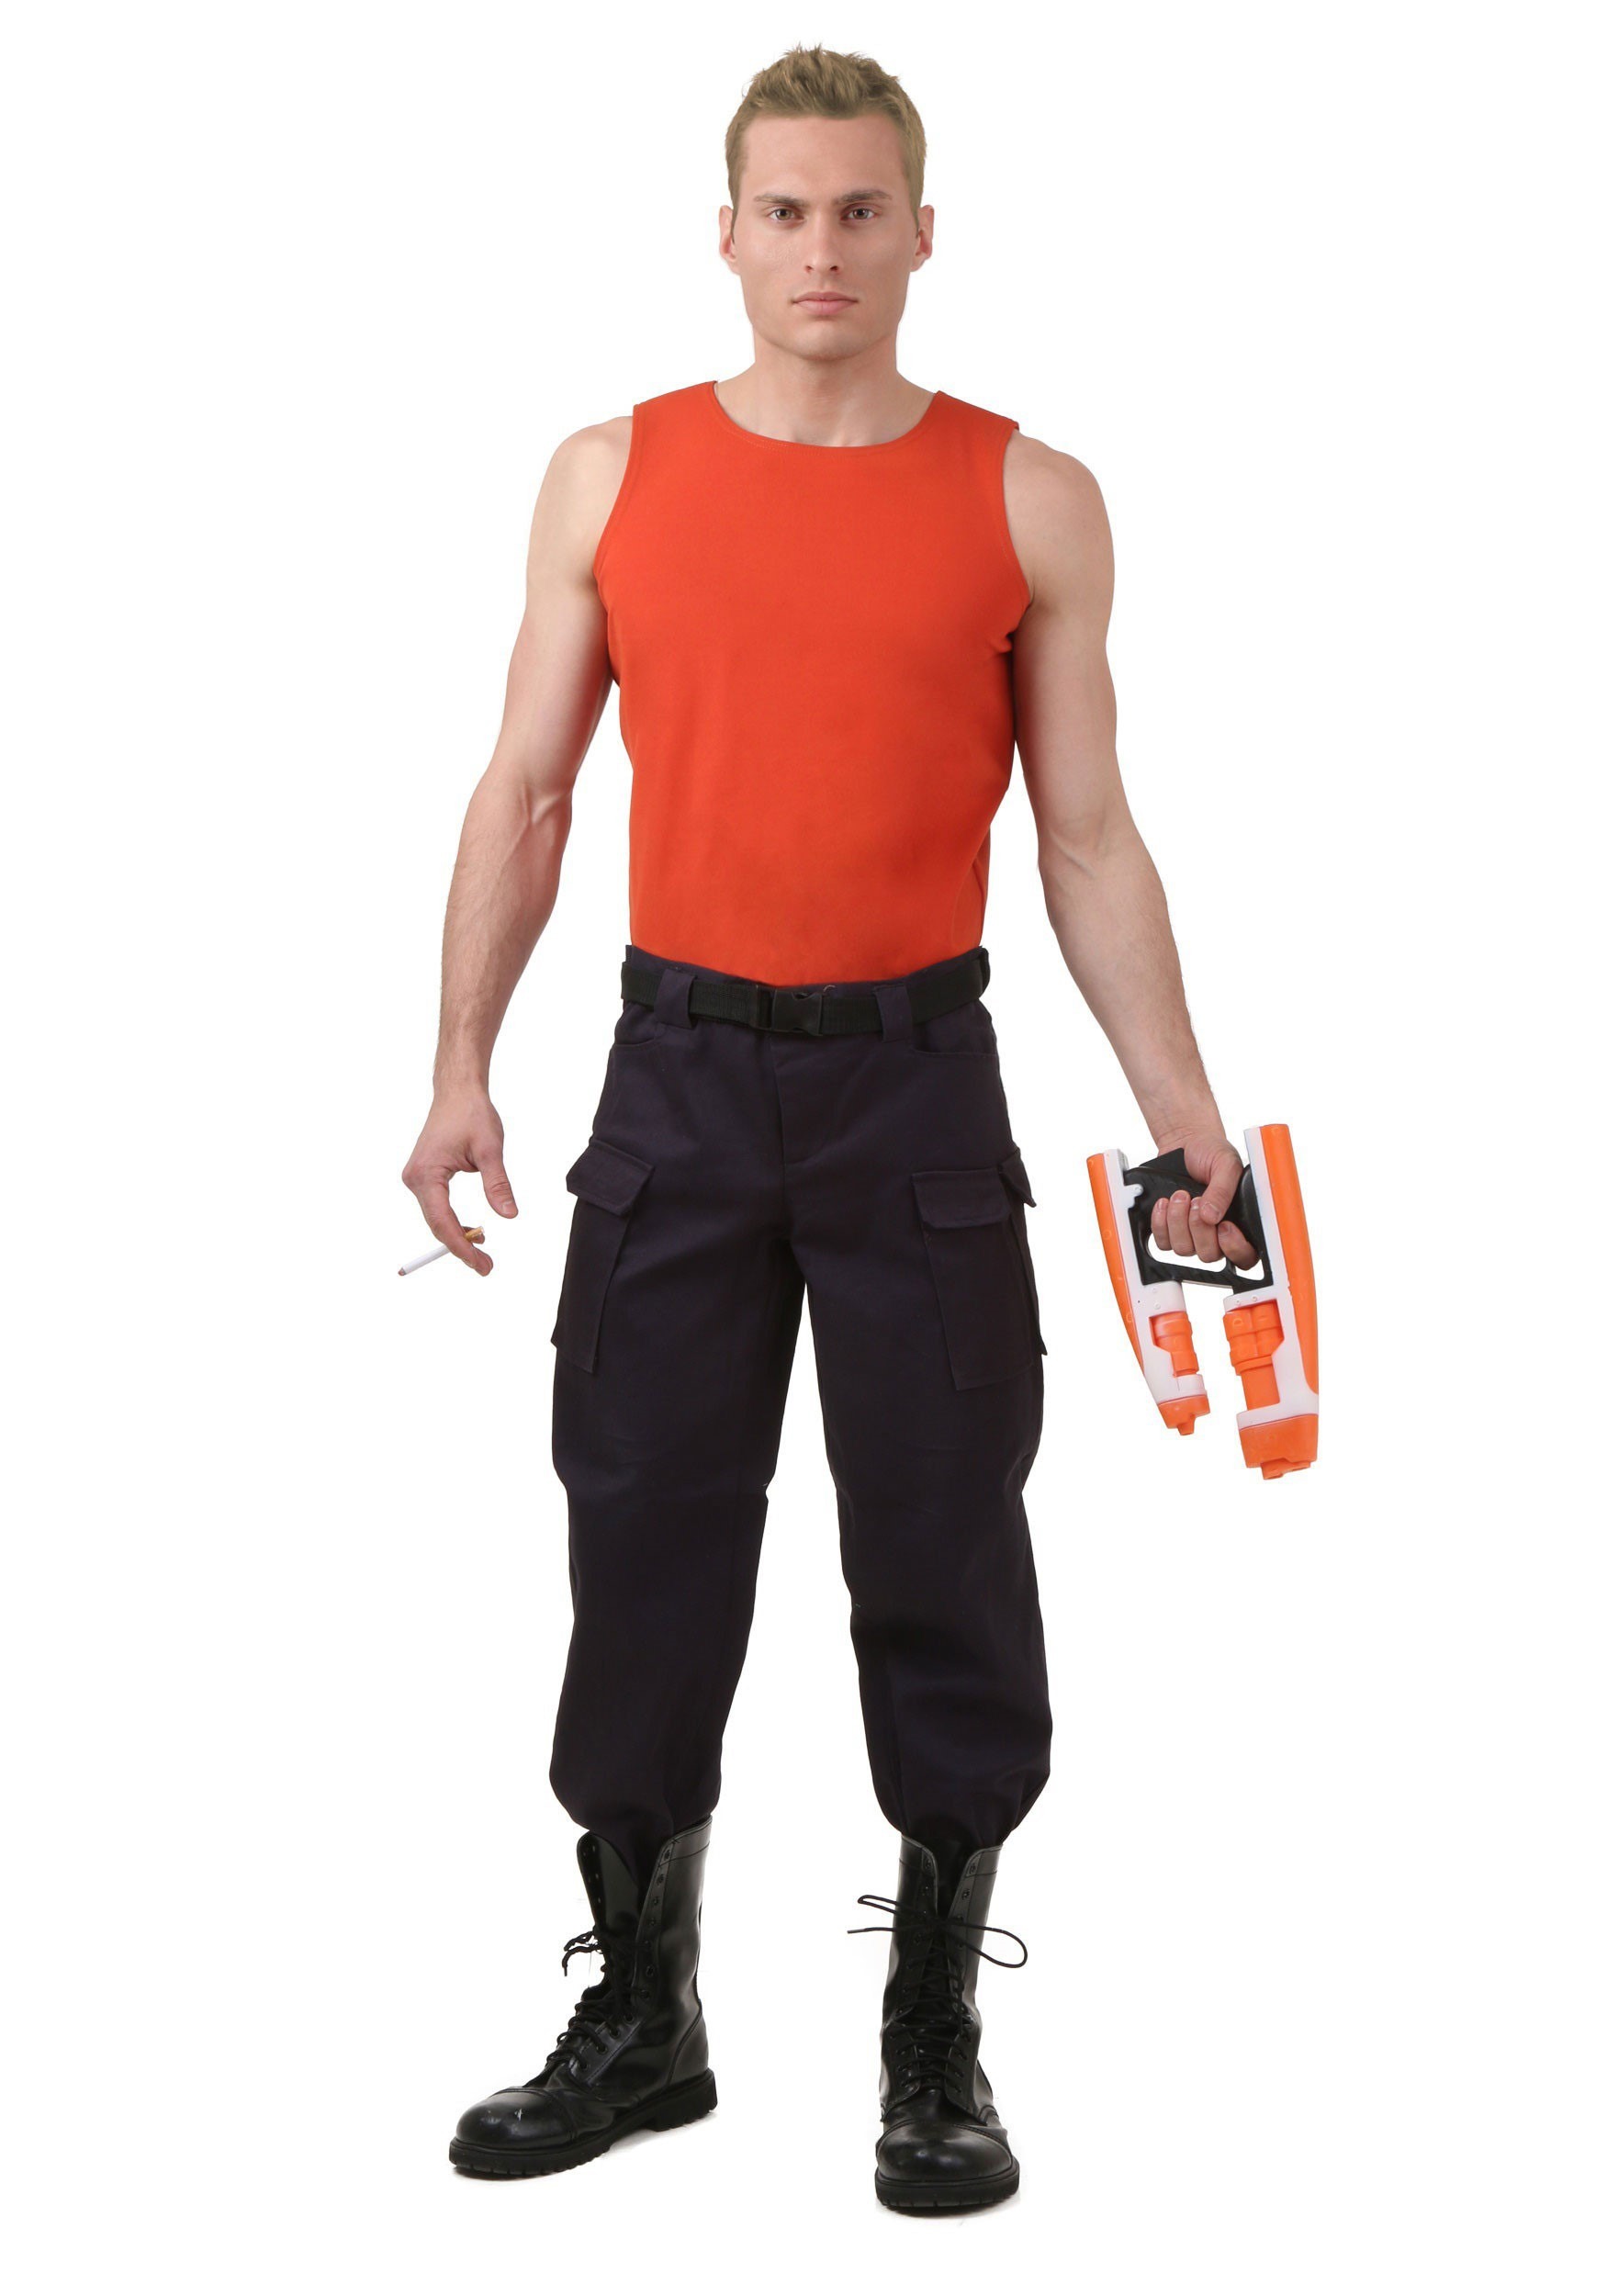 Image of Fifth Element Korben Dallas Costume ID FUN2360-M